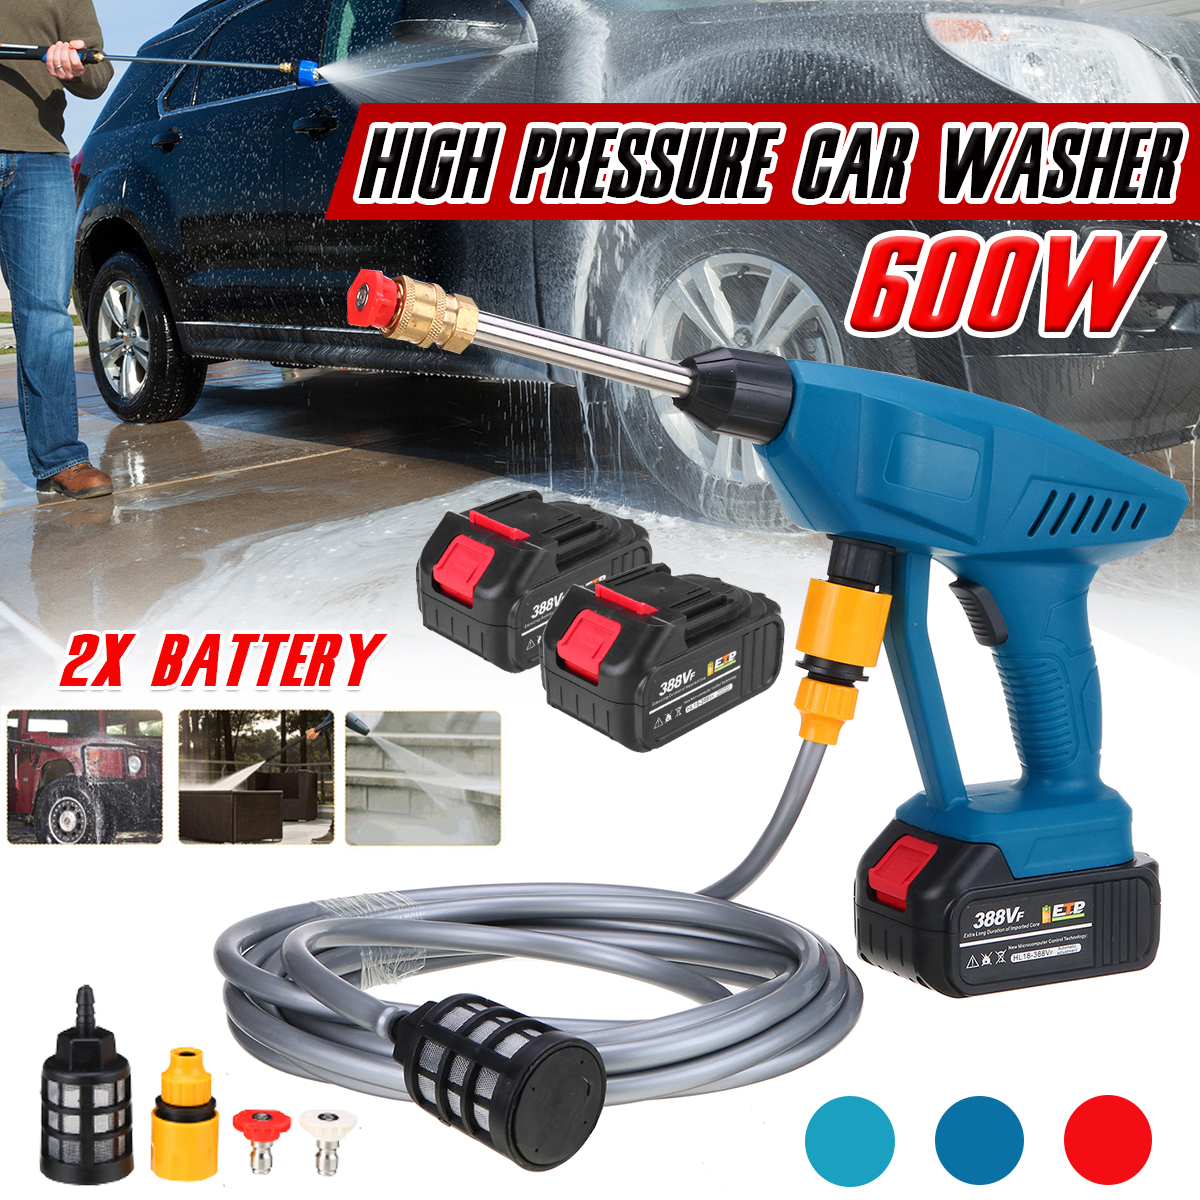 600W-High-Pressure-Car-Power-Washer-W-2Pcs-Battery-Spray-Guns--Wand-Lance-Nozzle-Tips-Hose-Kit-1869994-1